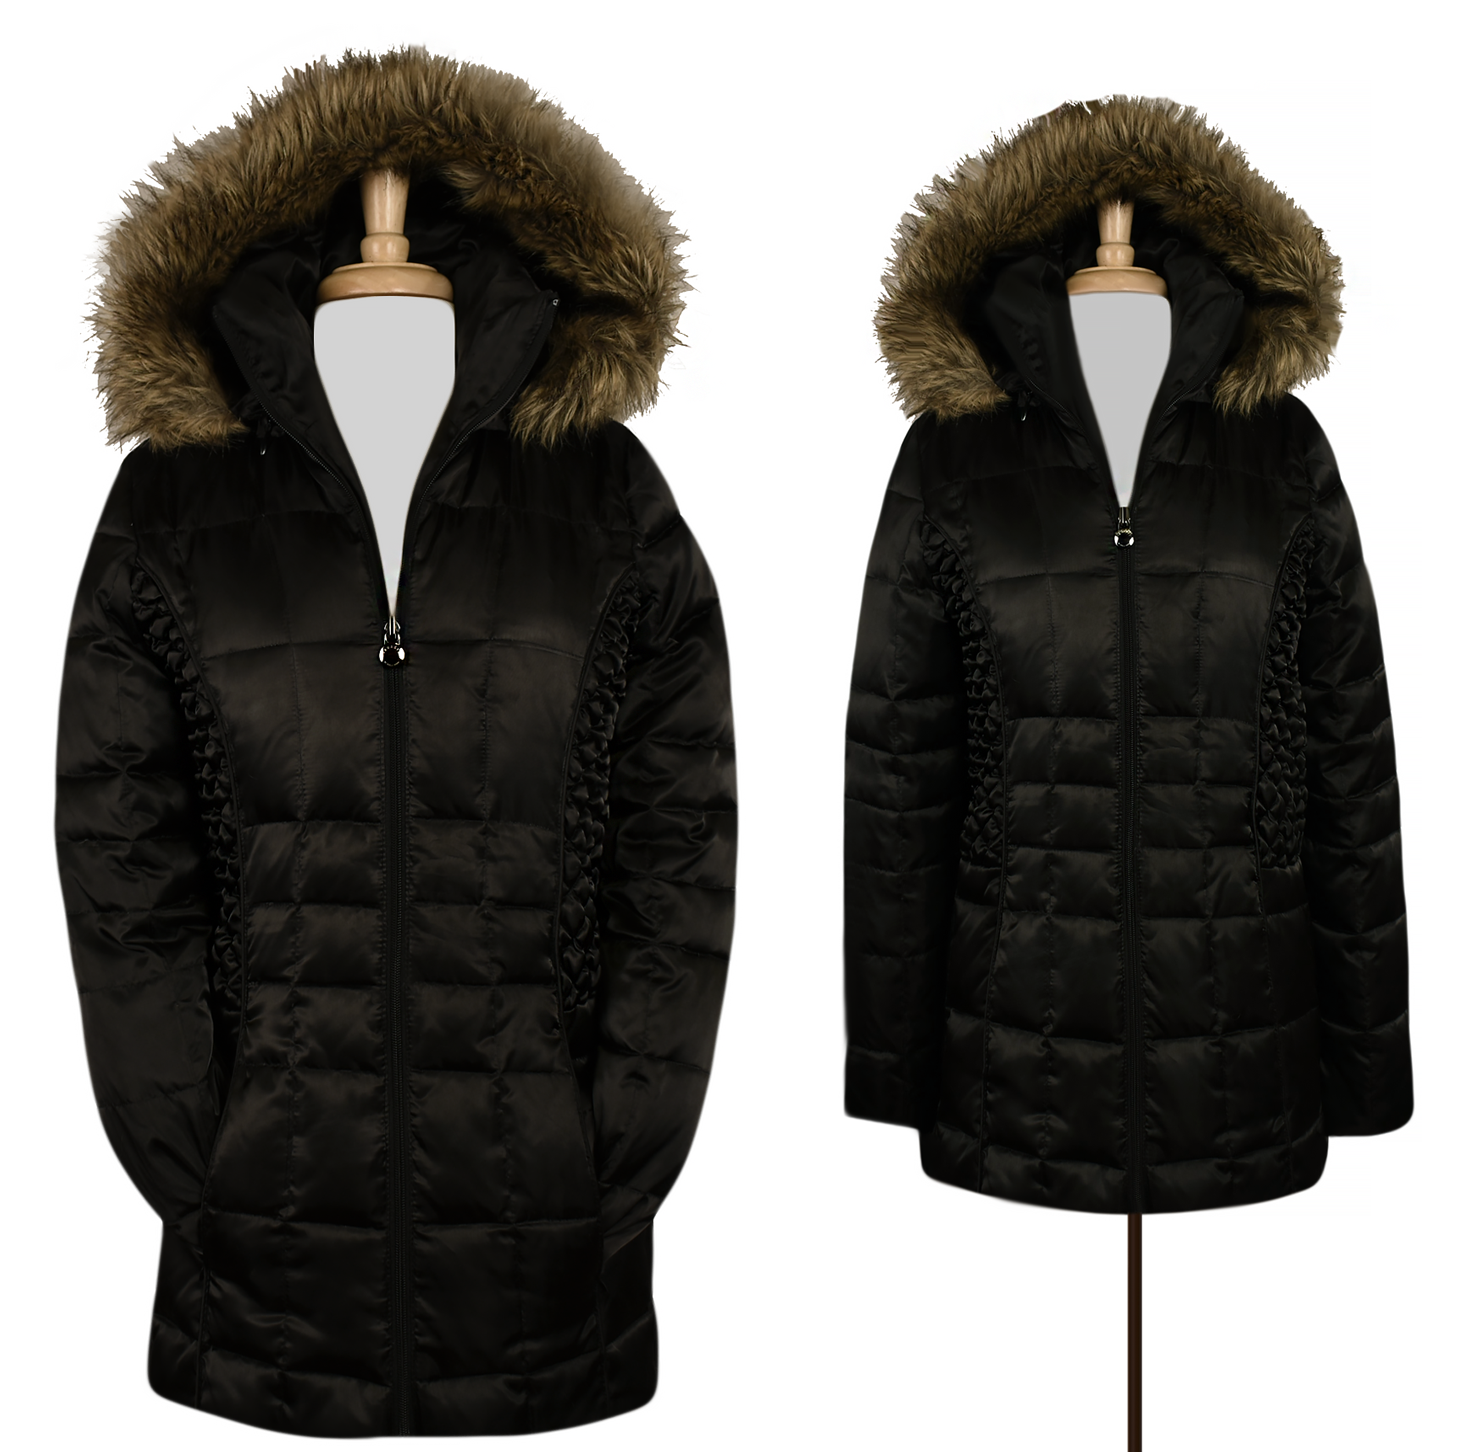 winter jacket with fur hood